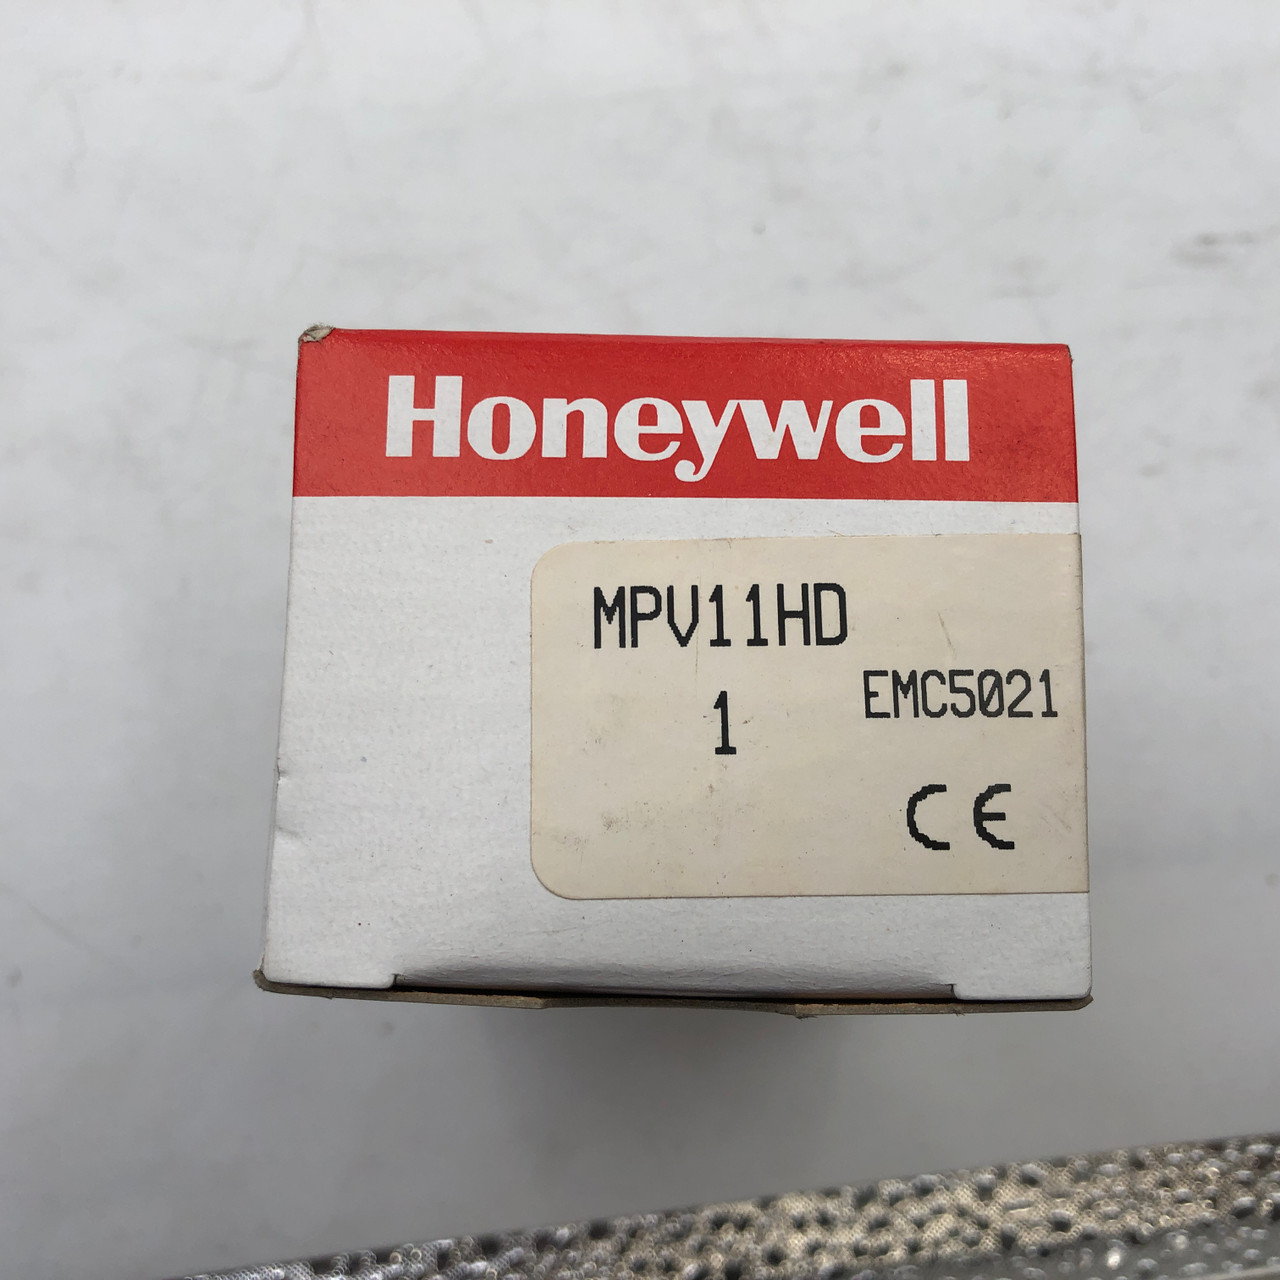 HONEYWELL MPV11HD SPDT SENSOR RELAY BASE - NEW